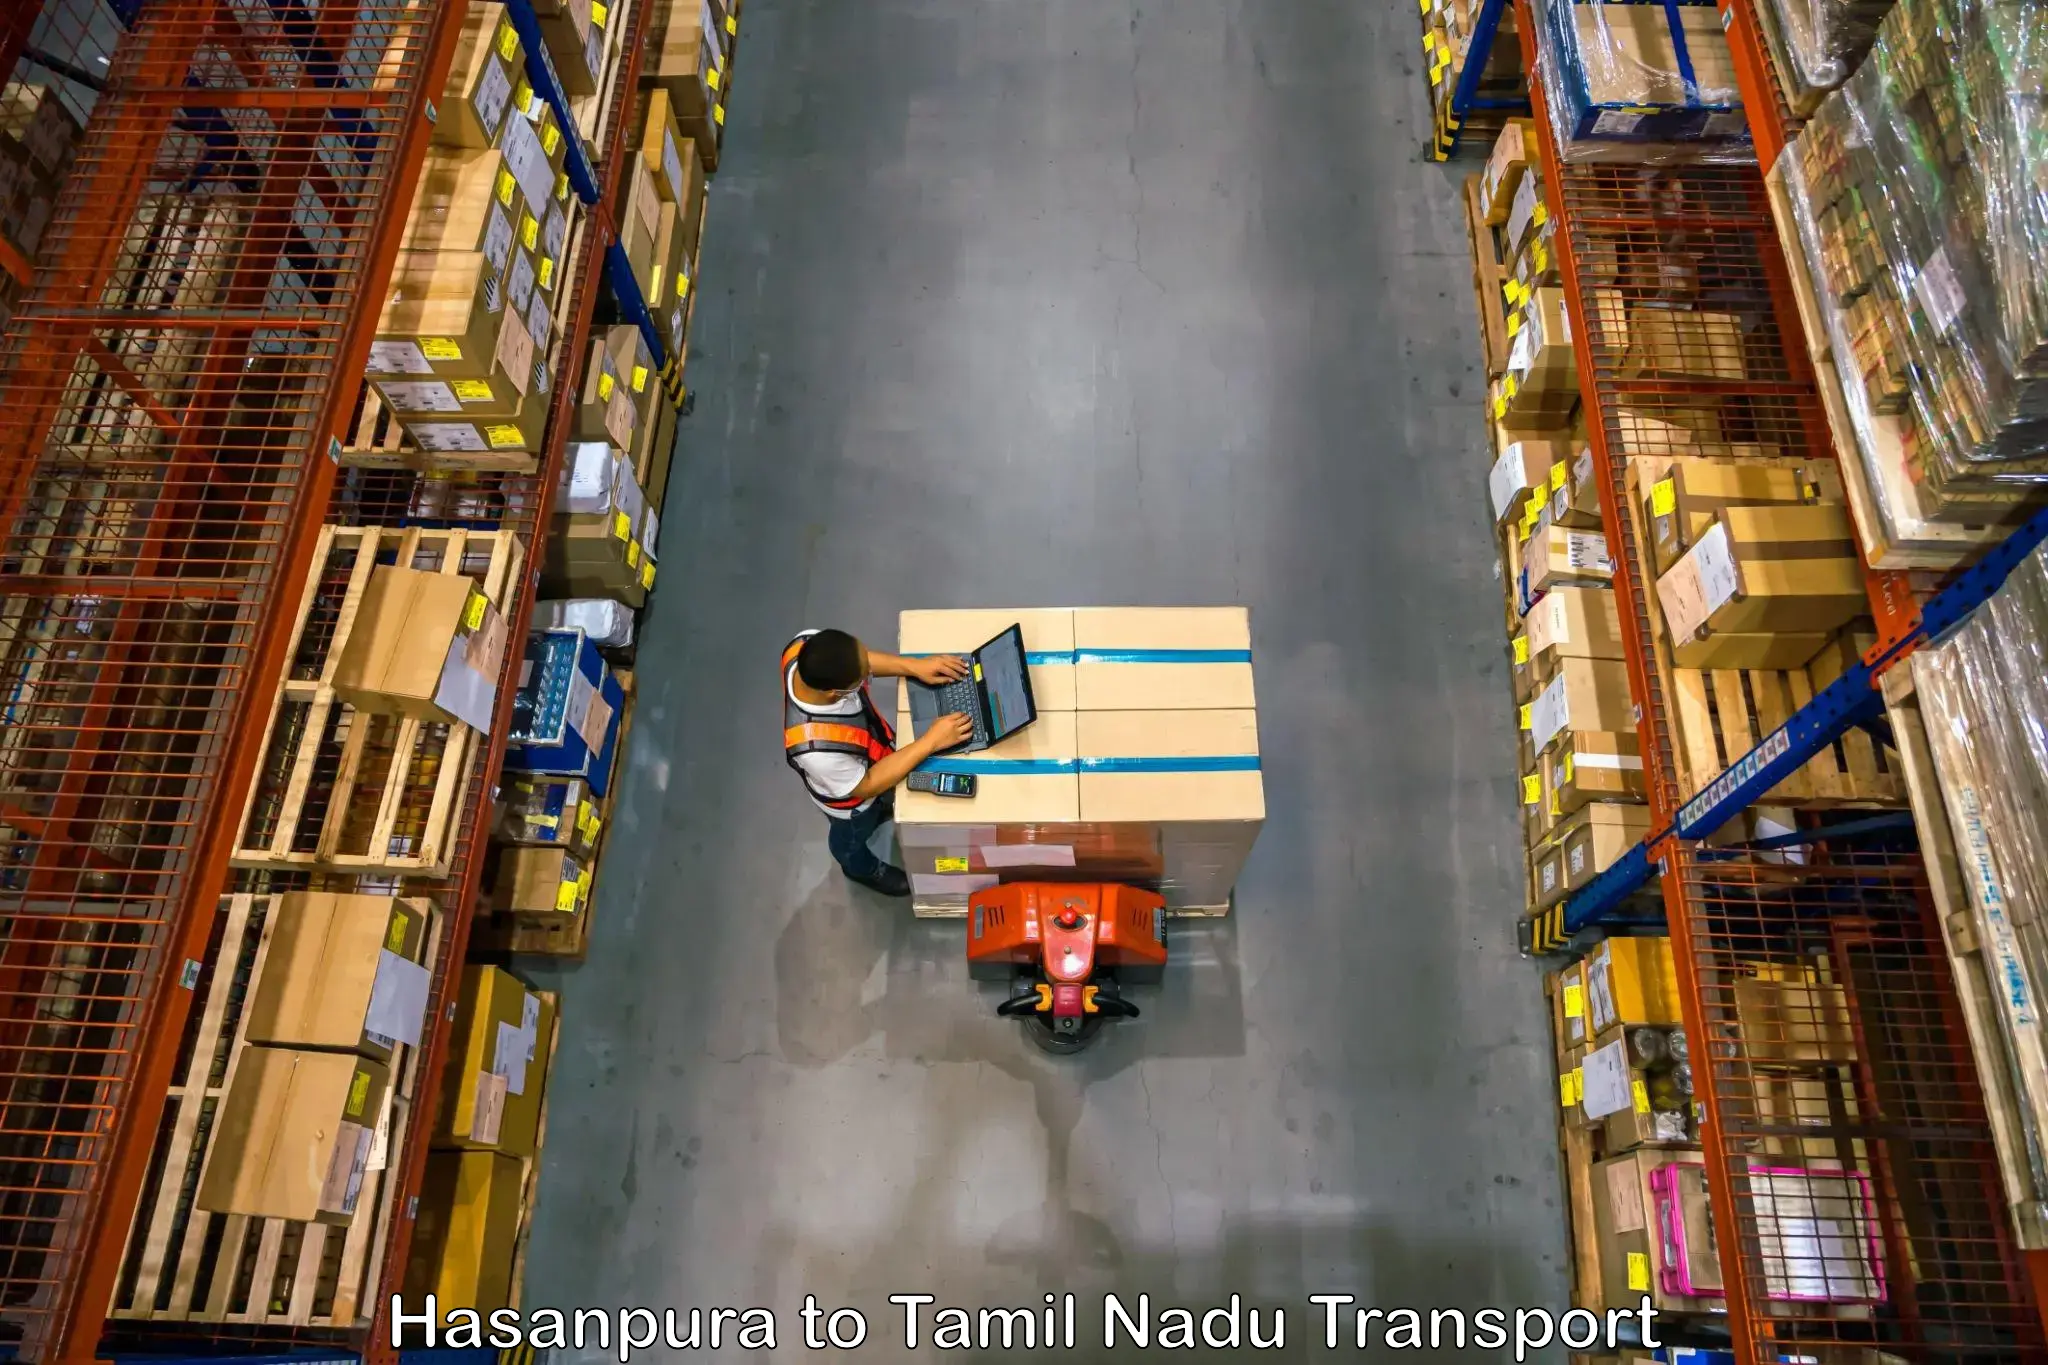 Shipping partner Hasanpura to Chinnasalem